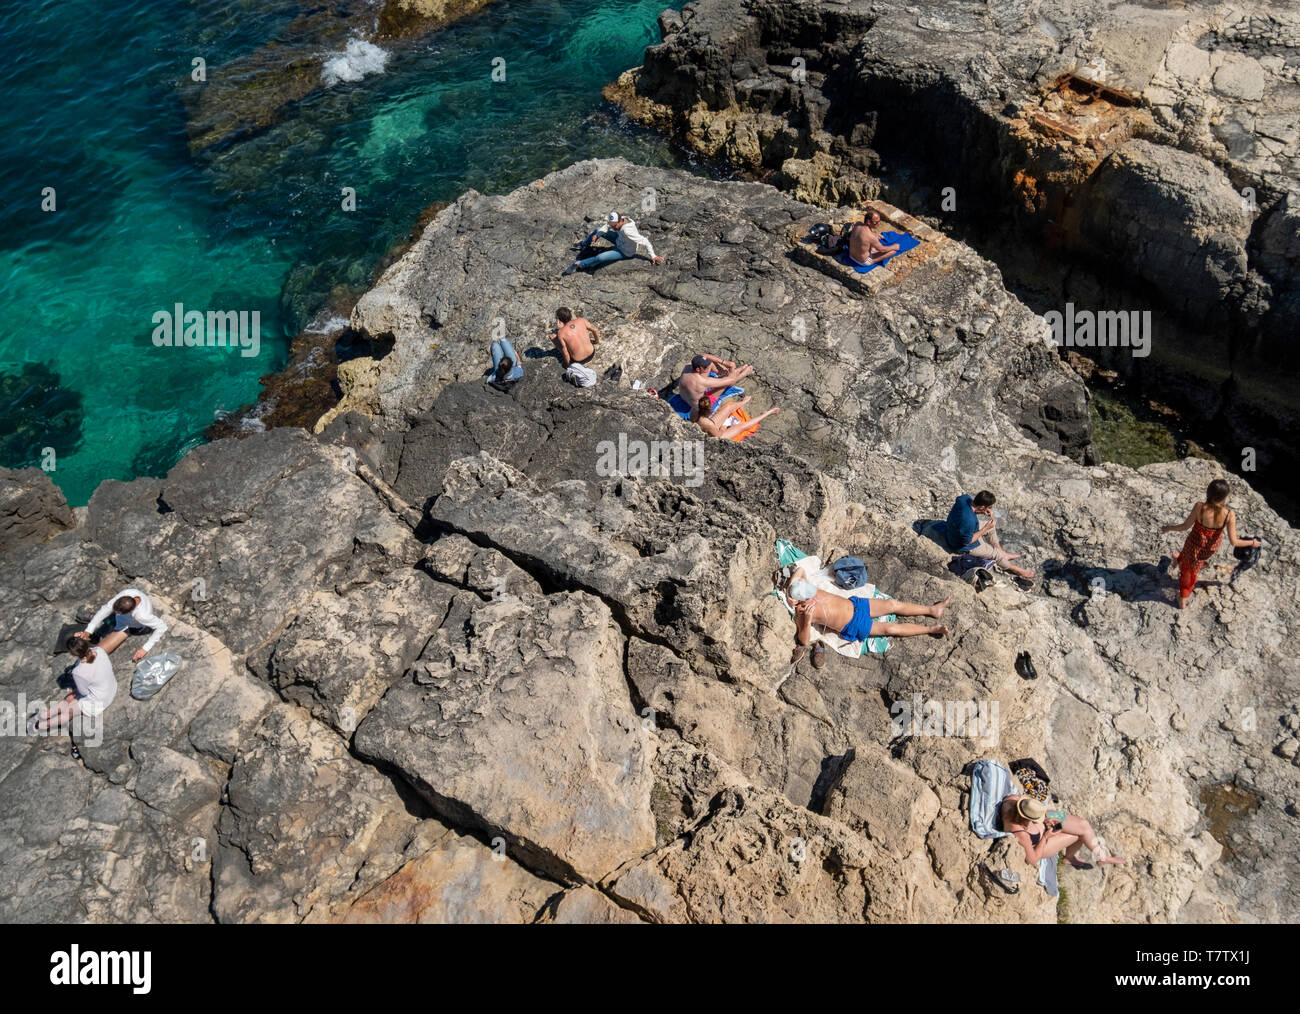 People sunbathing on the rocky coastline, Ortygia Island, Syracuse, Sicily. Stock Photo